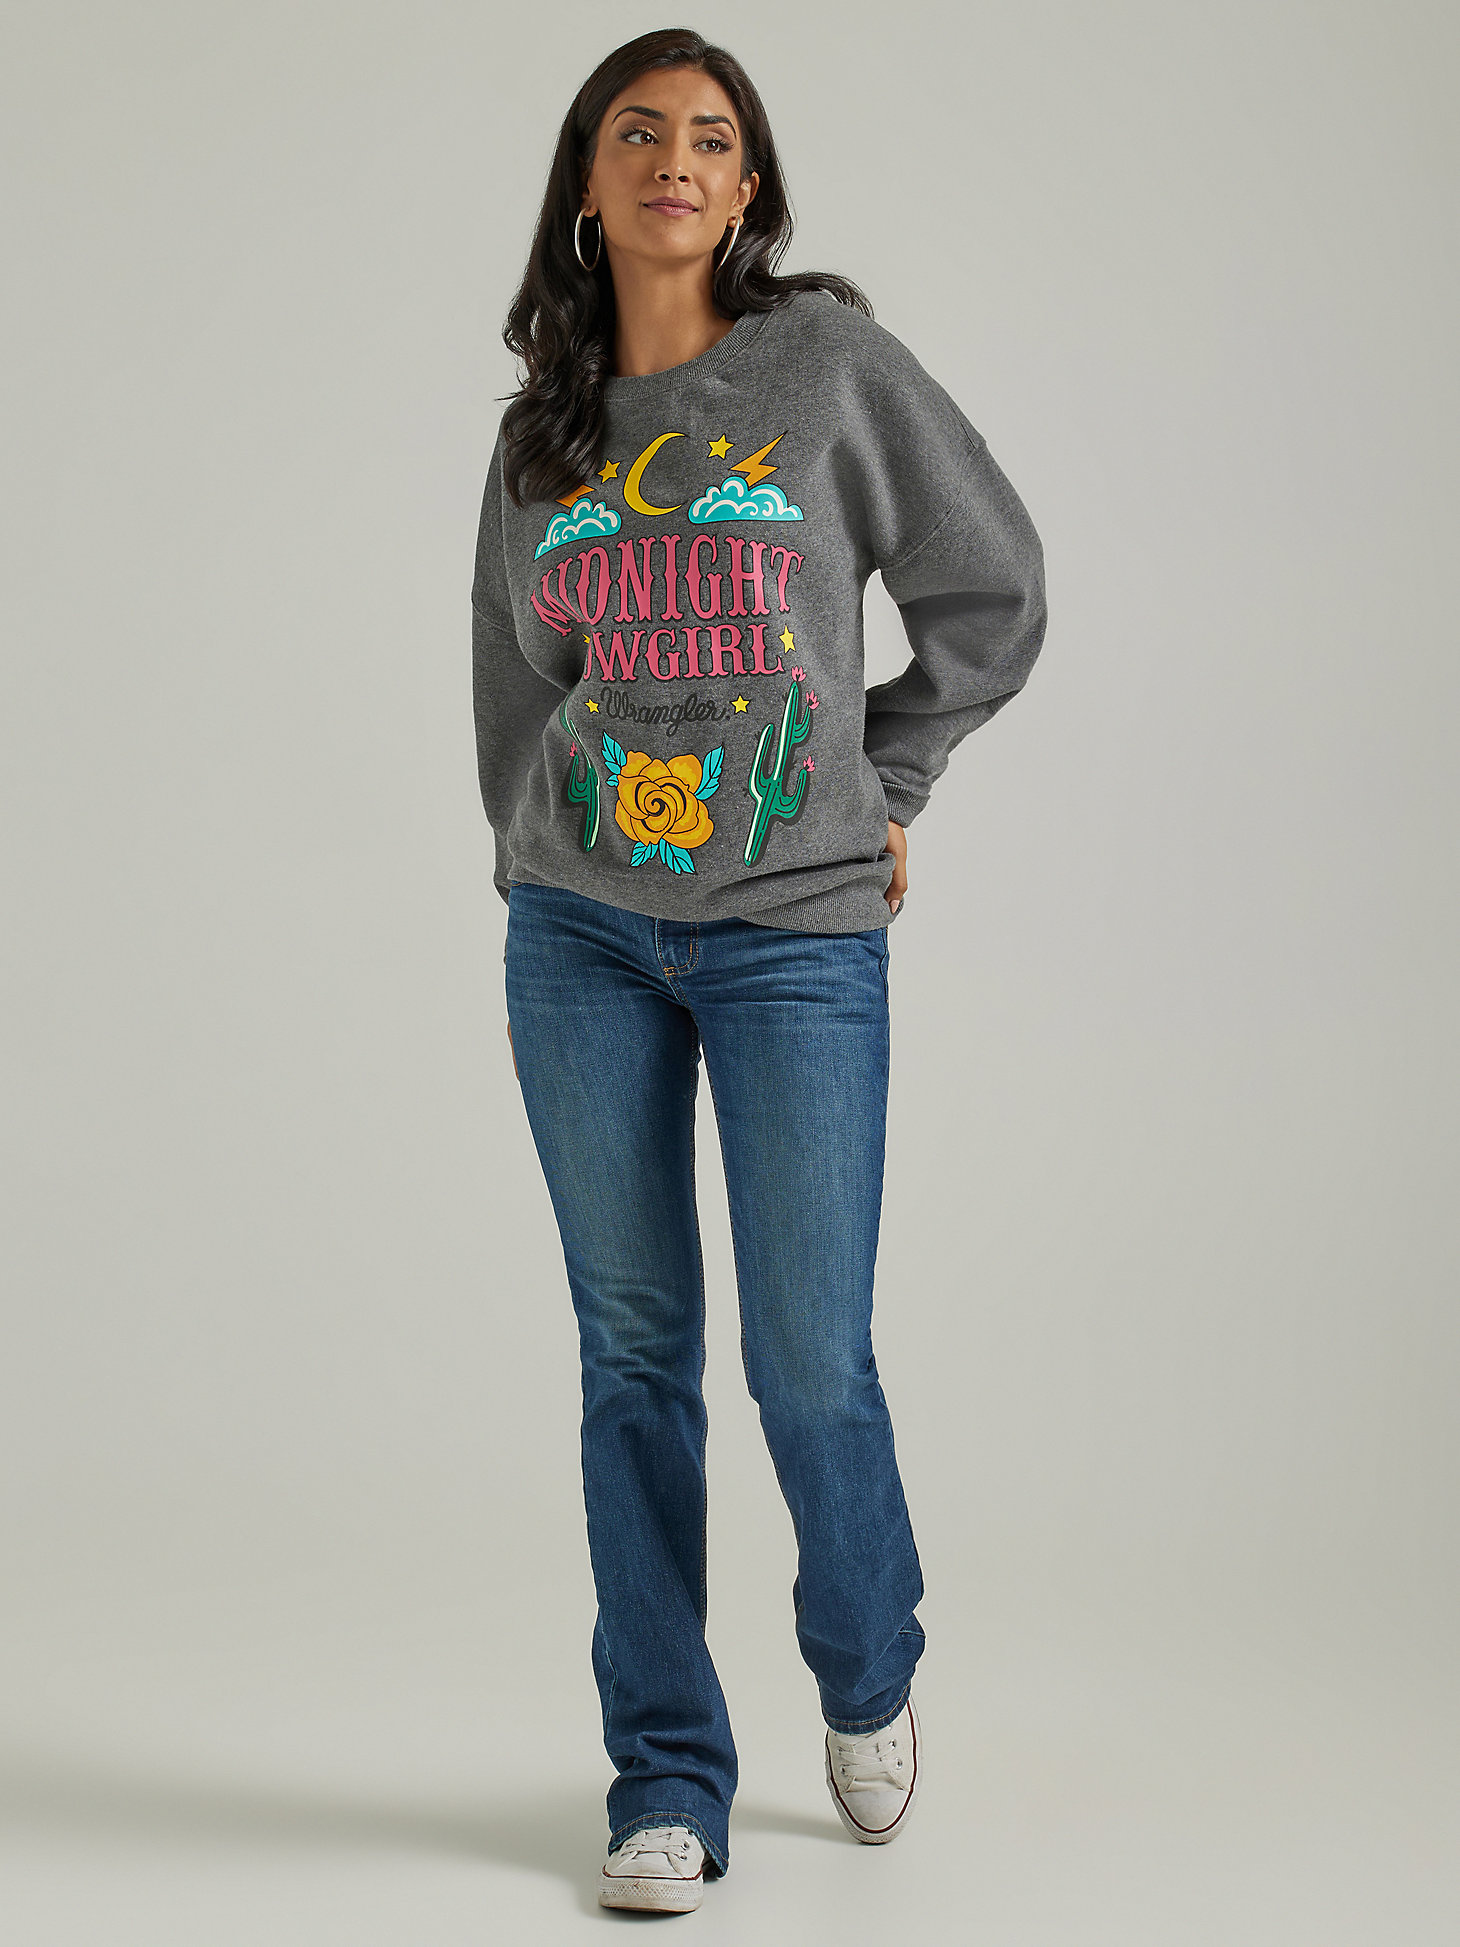 Women's Wrangler Retro® Midnight Cowgirl Oversized Sweatshirt in Grey alternative view 1